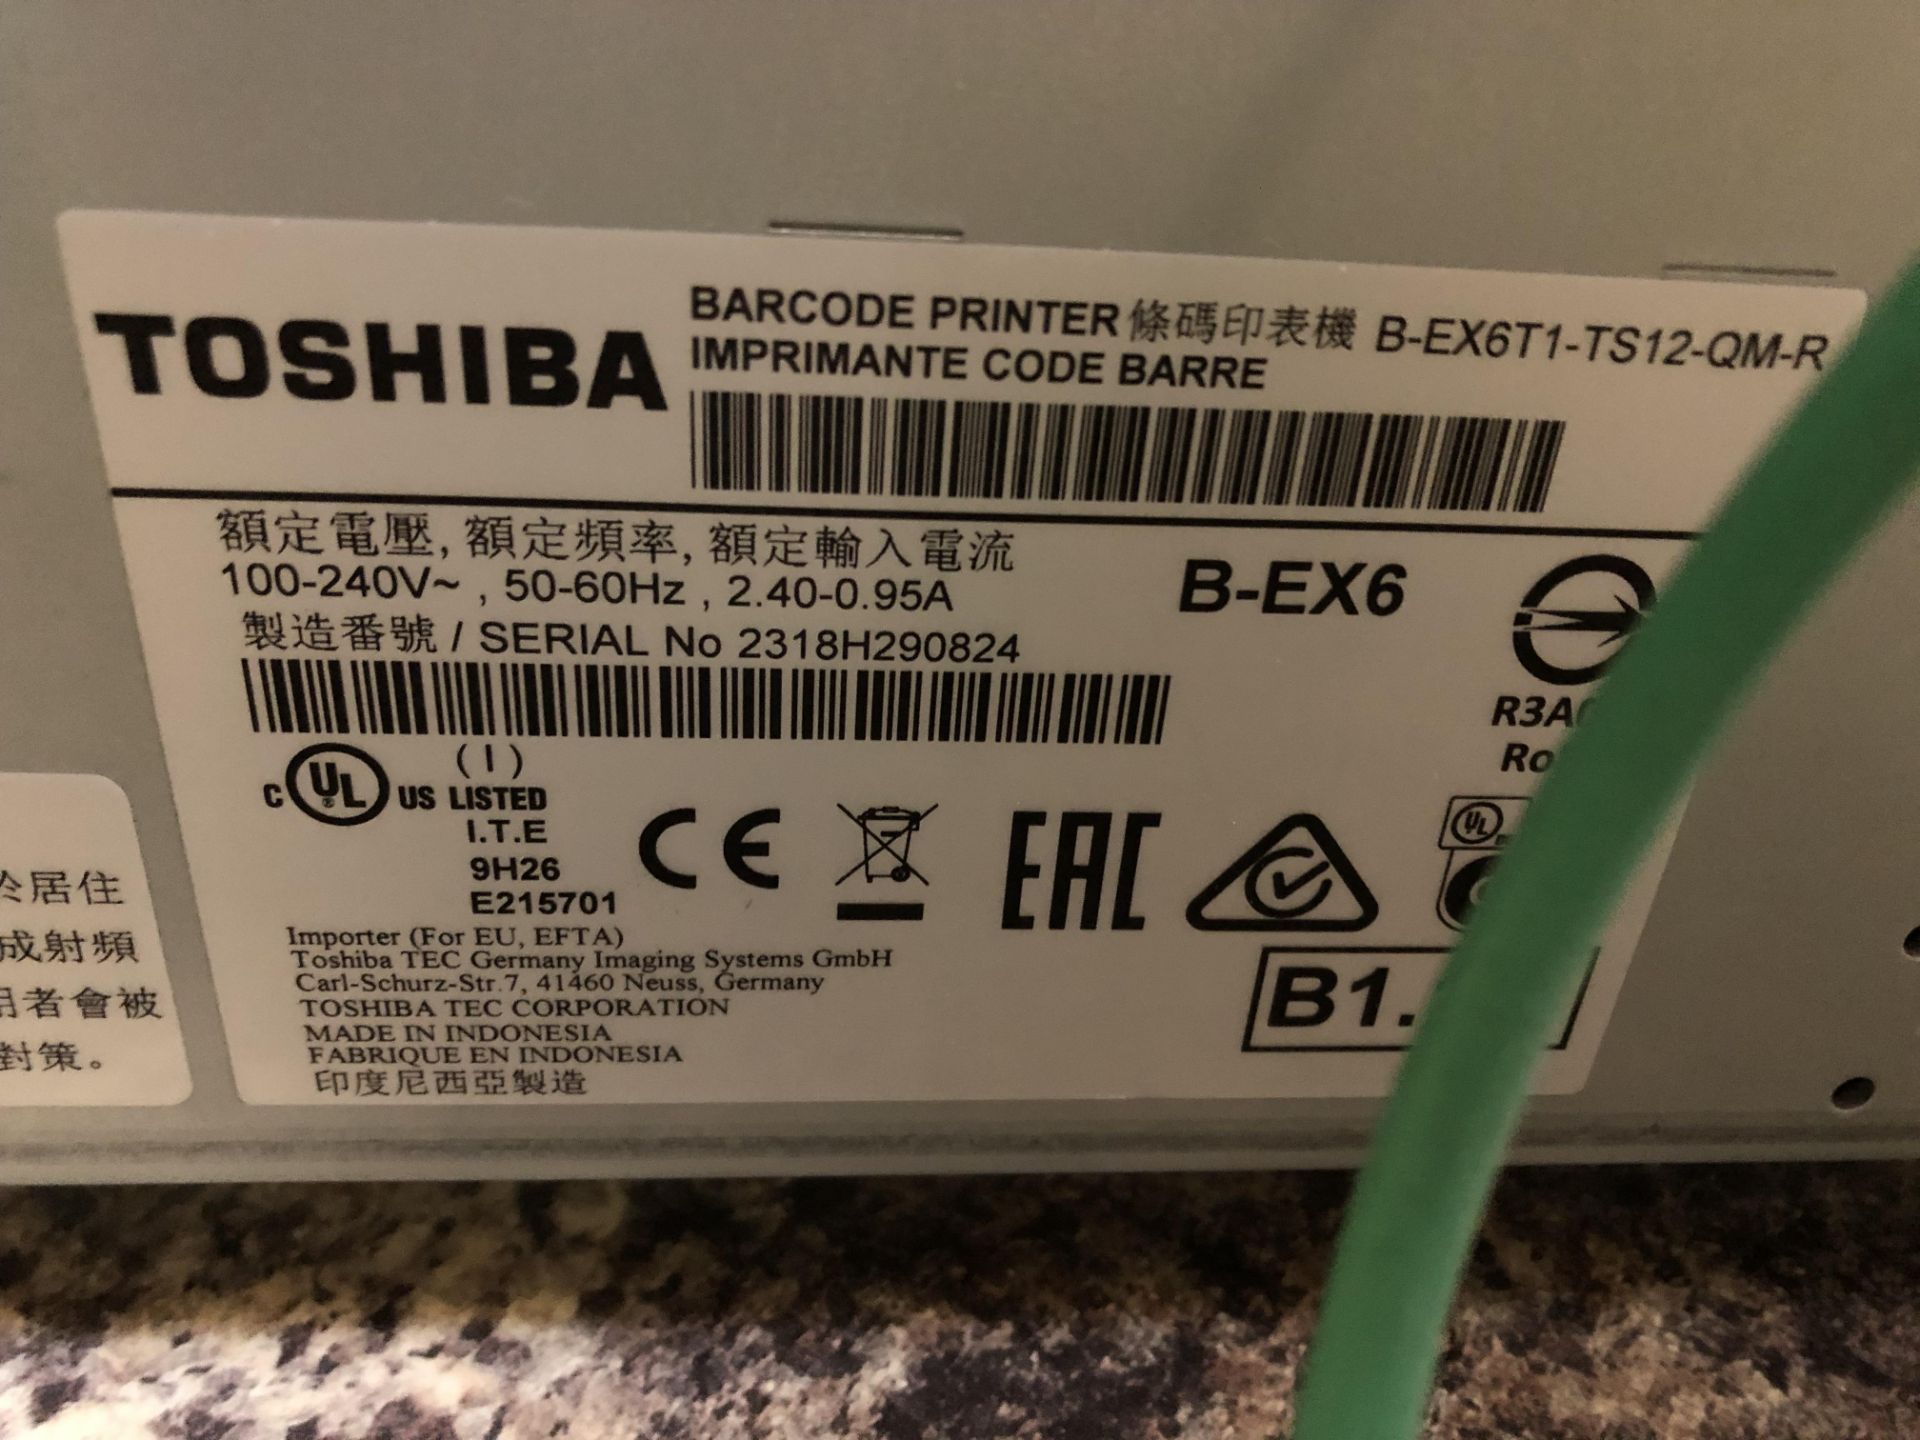 Toshiba B-EX6 Thermal Transfer Barcode Printer & Label Rewinder - Image 2 of 3